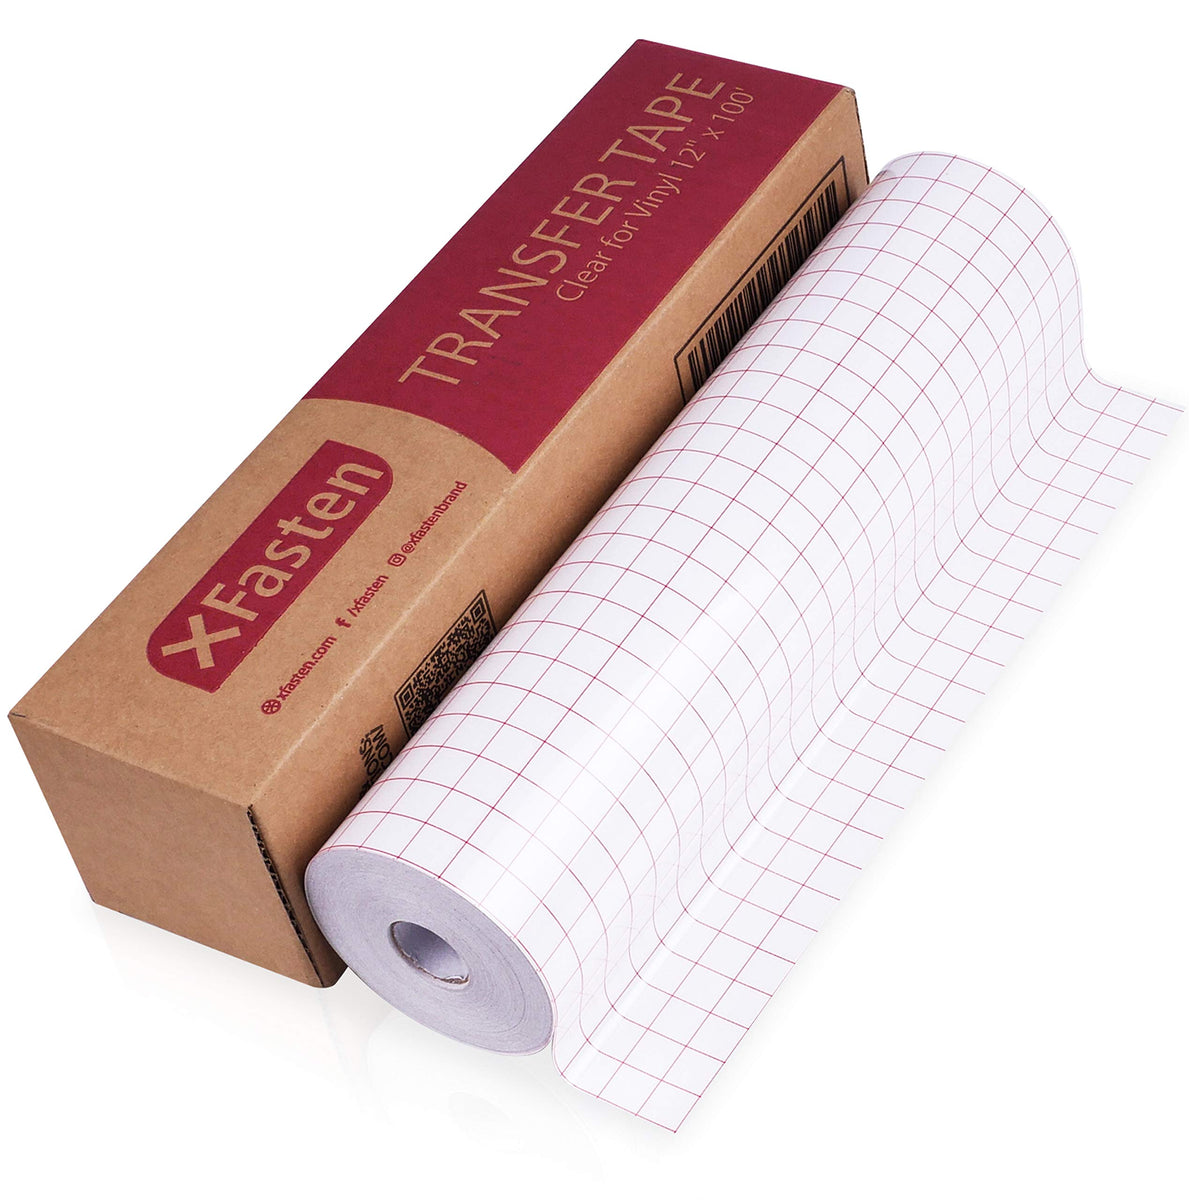 Transfer Tape for Permanent Vinyl - Standard Grid Transfer Paper Roll for  Circut 